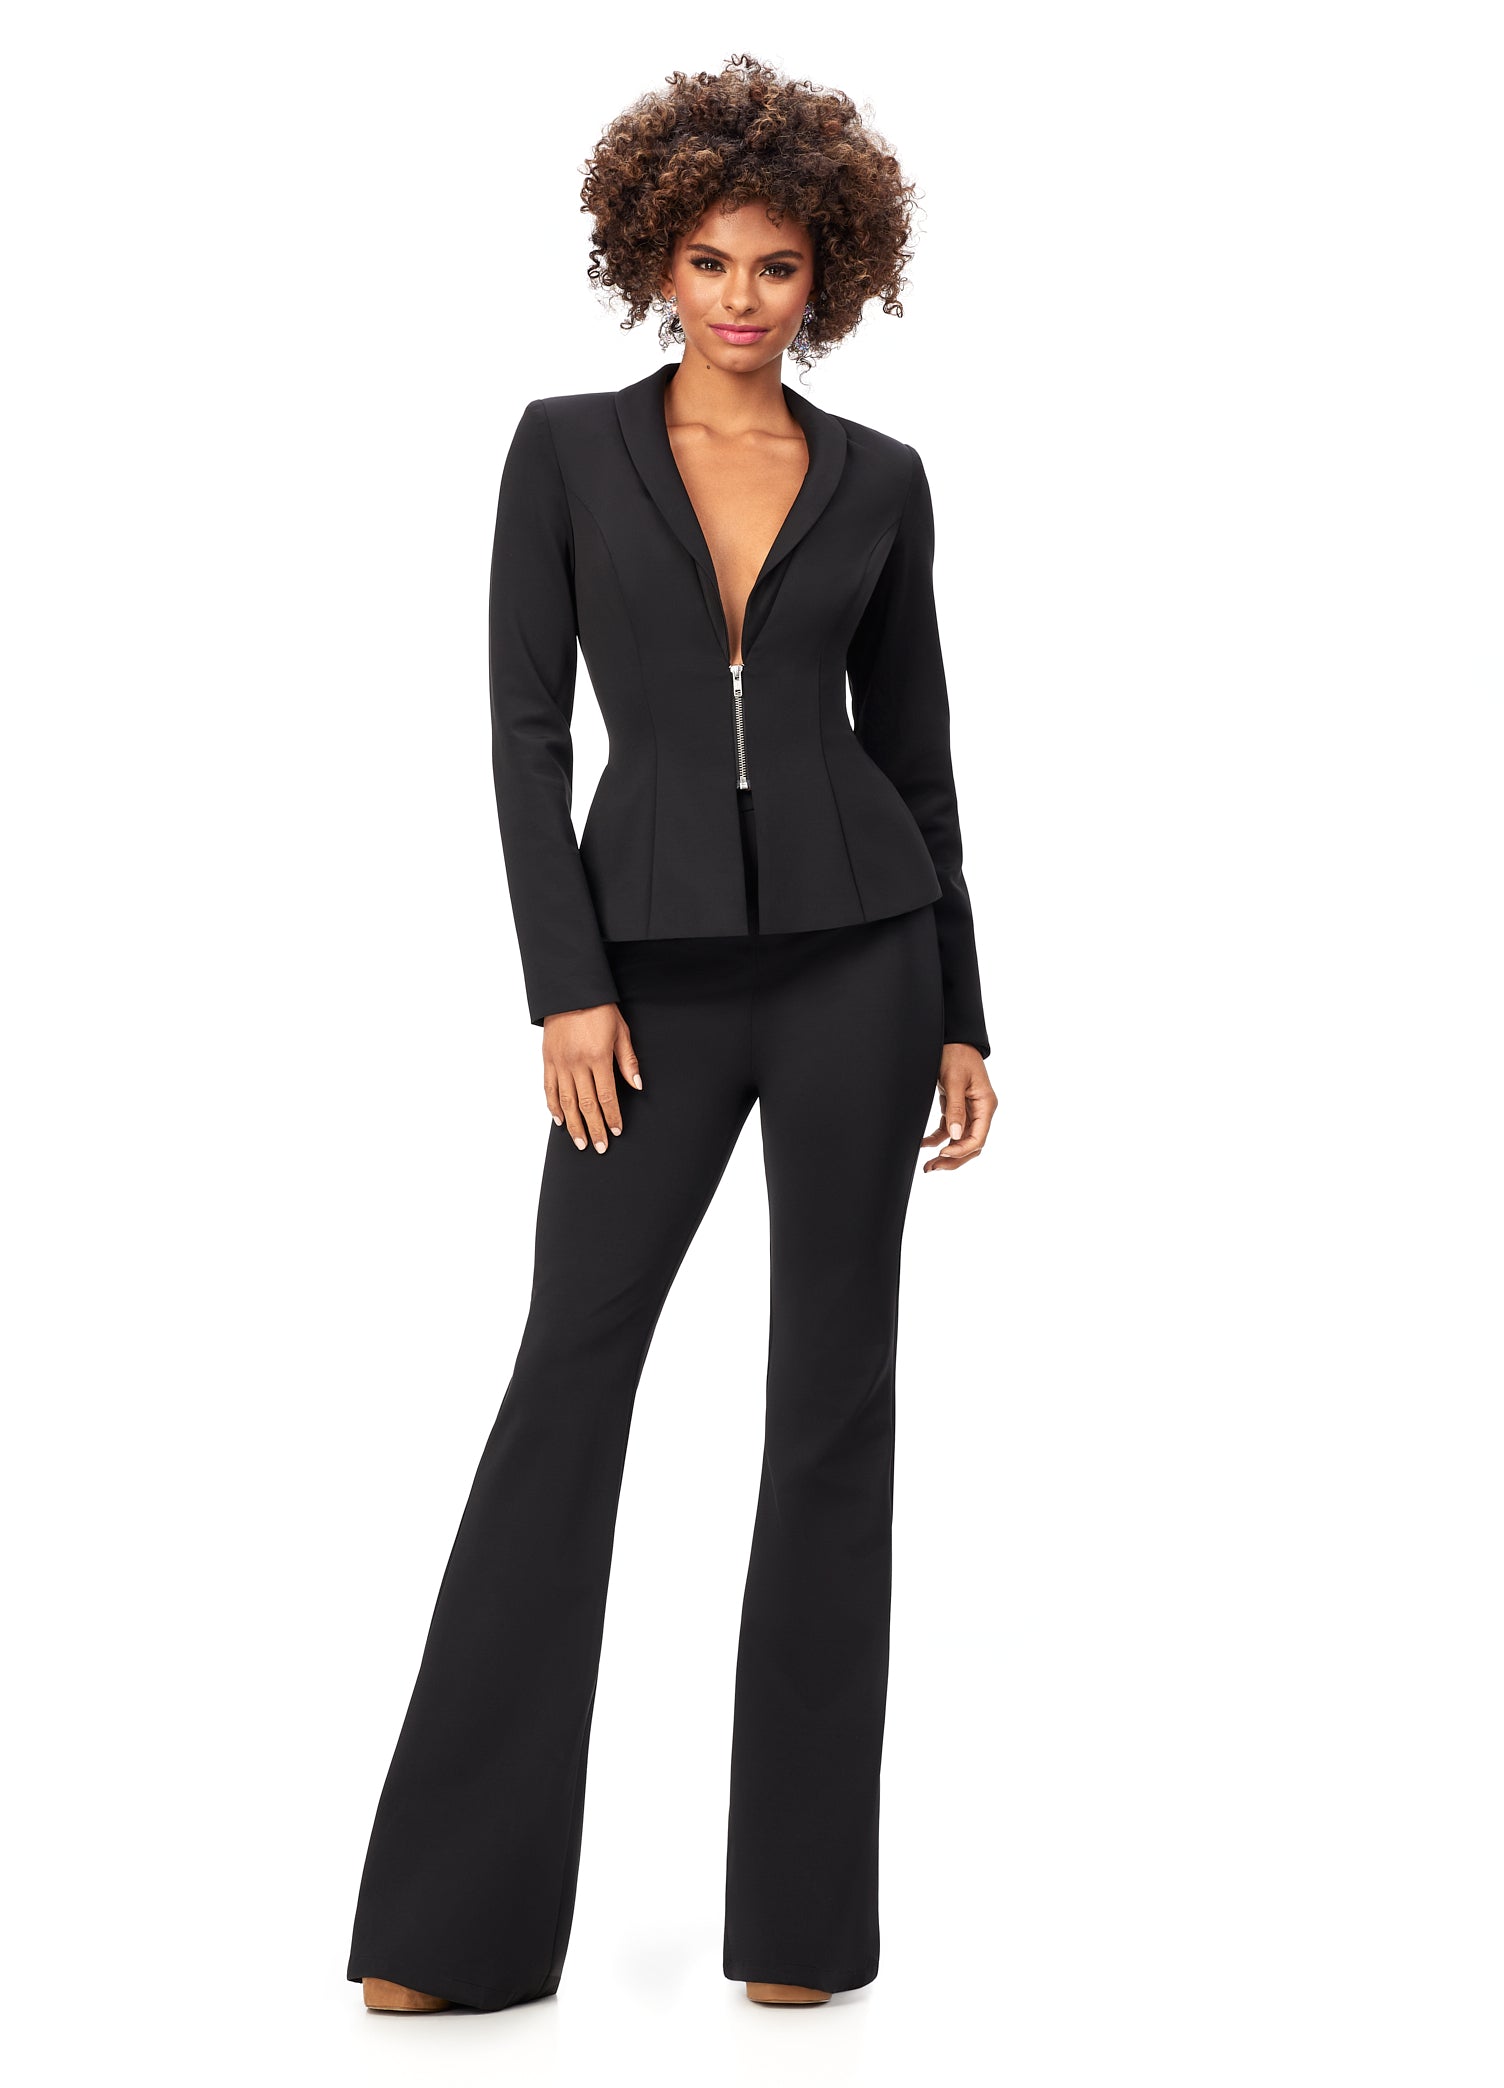 Black Dressy Pant Suits 3 Piece, Evening Pant Suit Woman With Crystal  Corset, Jacket and Pants. Women Formal Wear is Black Suit. 